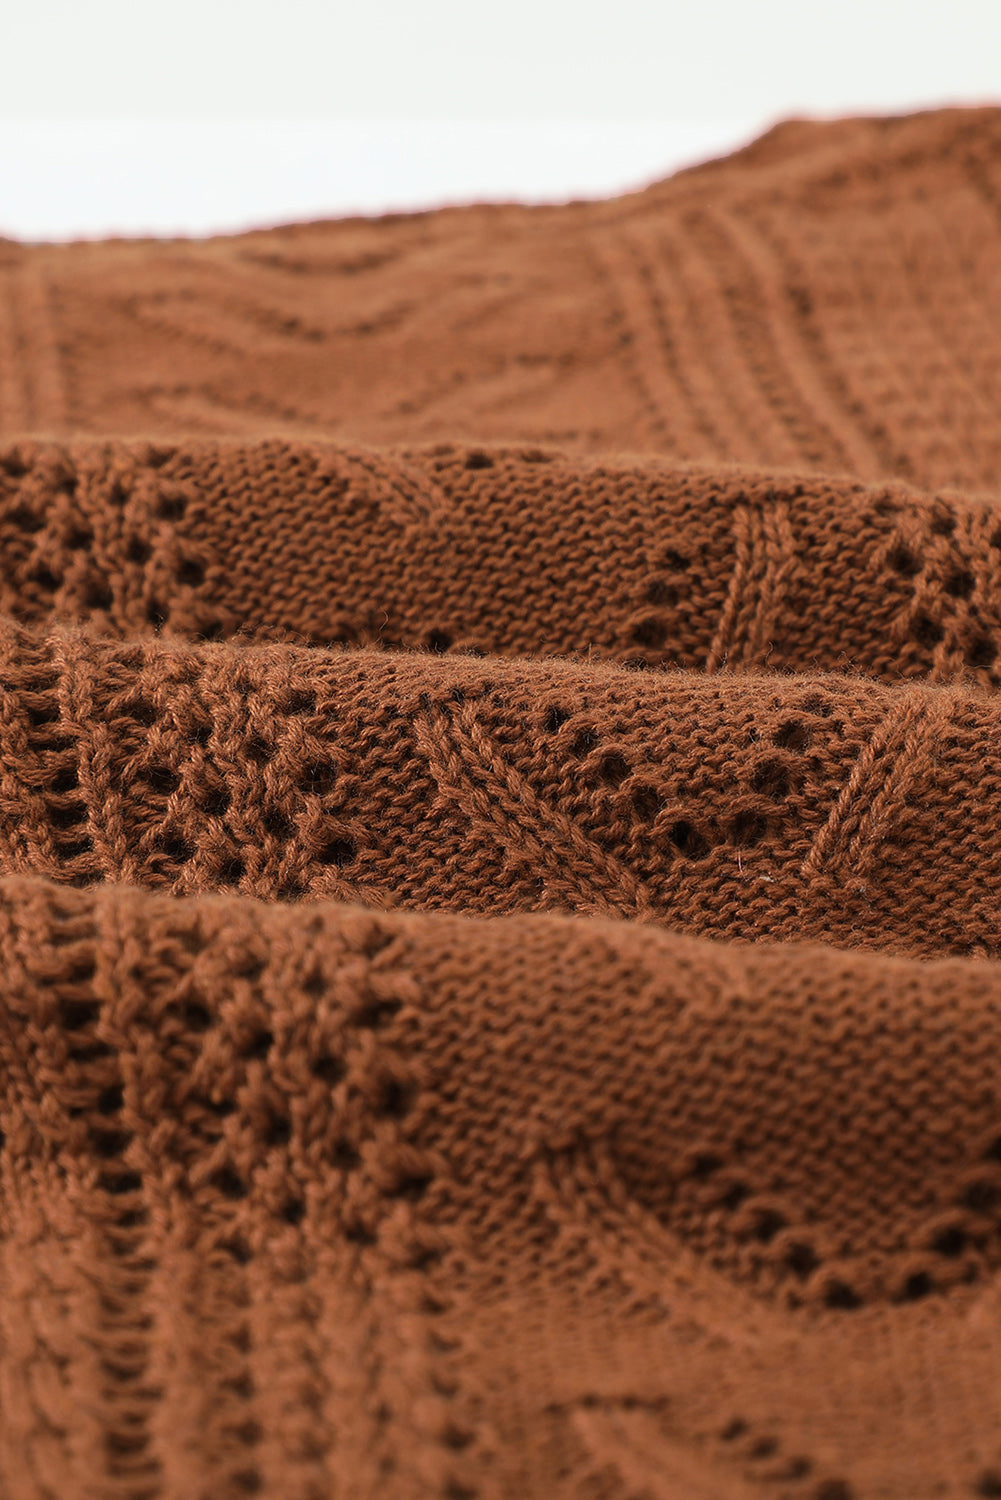 Apricot Crochet Lace Pointelle Knit Sweater